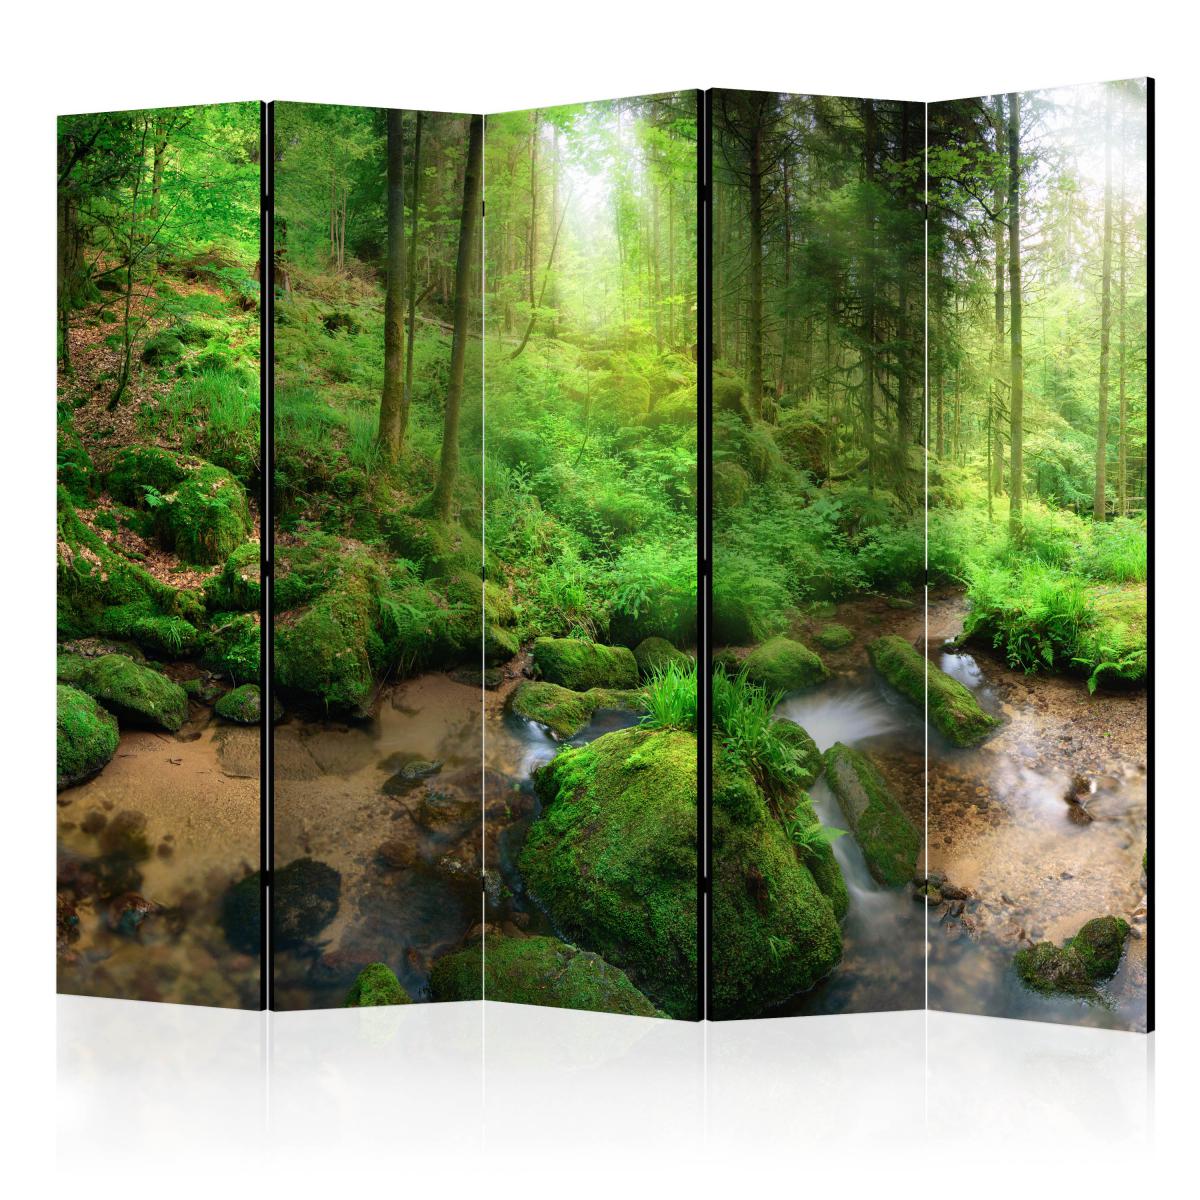 Bimago - Paravent 5 volets - Humid Forest II [Room Dividers] - Décoration, image, art | 225x172 cm | XL - Grand Format | - Cloisons